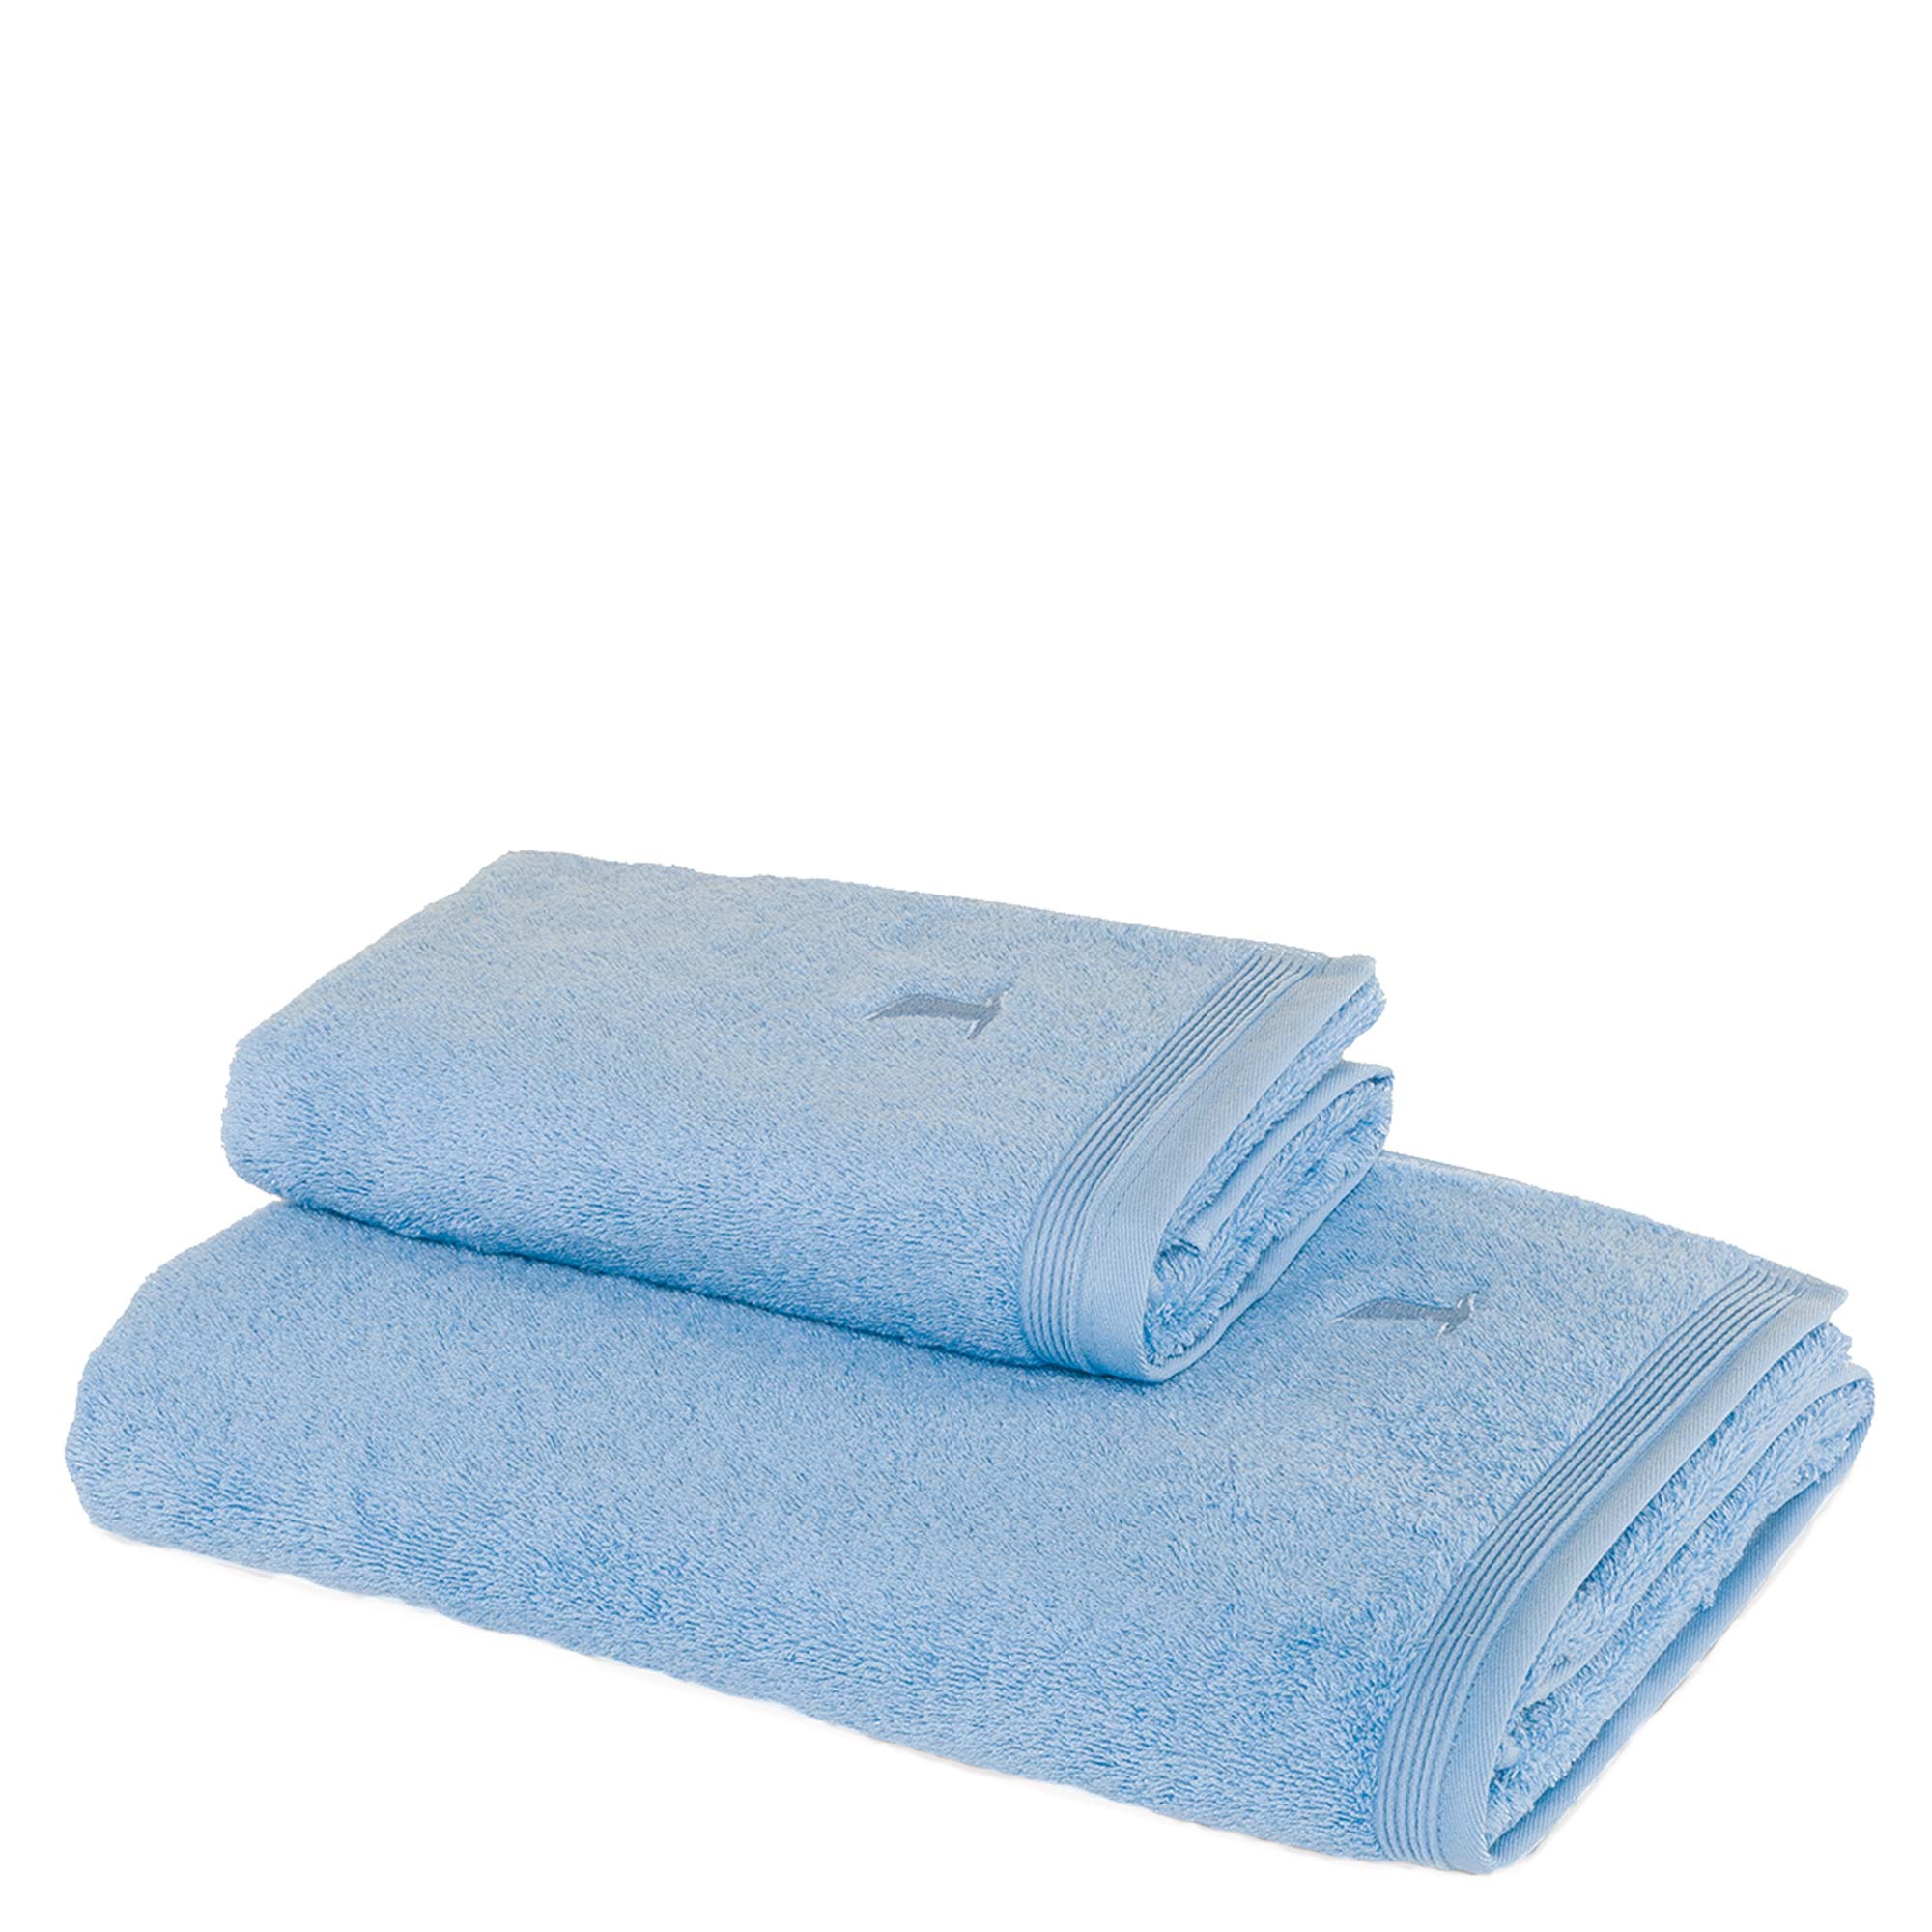 4013165658630-00-superwuschel-uni-baumwolle-waschhandschuh-seiftuch-handtuch-saunatuch-duschtuch-30x30-moeve-blau